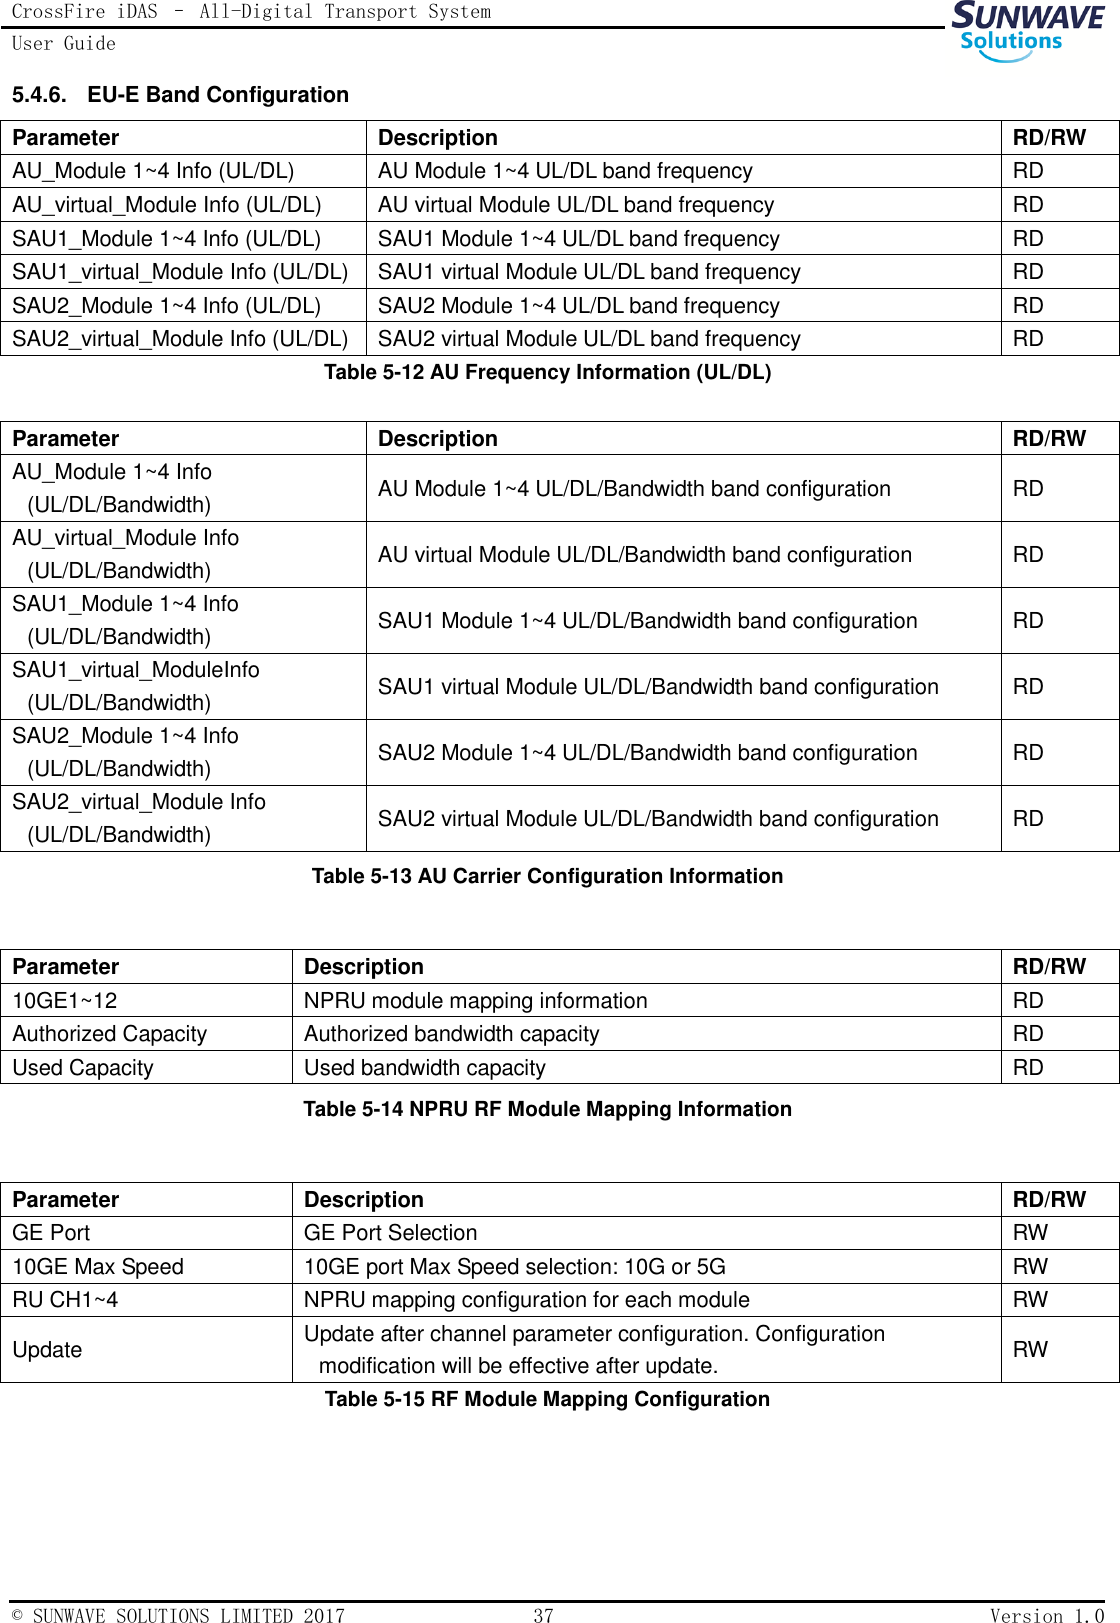 CrossFire iDAS – All-Digital Transport System User Guide   © SUNWAVE SOLUTIONS LIMITED 2017  37  Version 1.0  5.4.6.  EU-E Band Configuration Parameter Description RD/RW AU_Module 1~4 Info (UL/DL) AU Module 1~4 UL/DL band frequency RD AU_virtual_Module Info (UL/DL) AU virtual Module UL/DL band frequency RD SAU1_Module 1~4 Info (UL/DL) SAU1 Module 1~4 UL/DL band frequency RD SAU1_virtual_Module Info (UL/DL) SAU1 virtual Module UL/DL band frequency RD SAU2_Module 1~4 Info (UL/DL) SAU2 Module 1~4 UL/DL band frequency RD SAU2_virtual_Module Info (UL/DL) SAU2 virtual Module UL/DL band frequency RD Table 5-12 AU Frequency Information (UL/DL)  Parameter Description RD/RW AU_Module 1~4 Info (UL/DL/Bandwidth) AU Module 1~4 UL/DL/Bandwidth band configuration RD AU_virtual_Module Info (UL/DL/Bandwidth) AU virtual Module UL/DL/Bandwidth band configuration RD SAU1_Module 1~4 Info (UL/DL/Bandwidth) SAU1 Module 1~4 UL/DL/Bandwidth band configuration RD SAU1_virtual_ModuleInfo (UL/DL/Bandwidth) SAU1 virtual Module UL/DL/Bandwidth band configuration RD SAU2_Module 1~4 Info (UL/DL/Bandwidth) SAU2 Module 1~4 UL/DL/Bandwidth band configuration RD SAU2_virtual_Module Info (UL/DL/Bandwidth) SAU2 virtual Module UL/DL/Bandwidth band configuration RD Table 5-13 AU Carrier Configuration Information  Parameter Description RD/RW 10GE1~12 NPRU module mapping information RD Authorized Capacity Authorized bandwidth capacity RD Used Capacity Used bandwidth capacity RD Table 5-14 NPRU RF Module Mapping Information  Parameter Description RD/RW GE Port GE Port Selection RW 10GE Max Speed 10GE port Max Speed selection: 10G or 5G RW RU CH1~4 NPRU mapping configuration for each module RW Update Update after channel parameter configuration. Configuration modification will be effective after update. RW Table 5-15 RF Module Mapping Configuration 